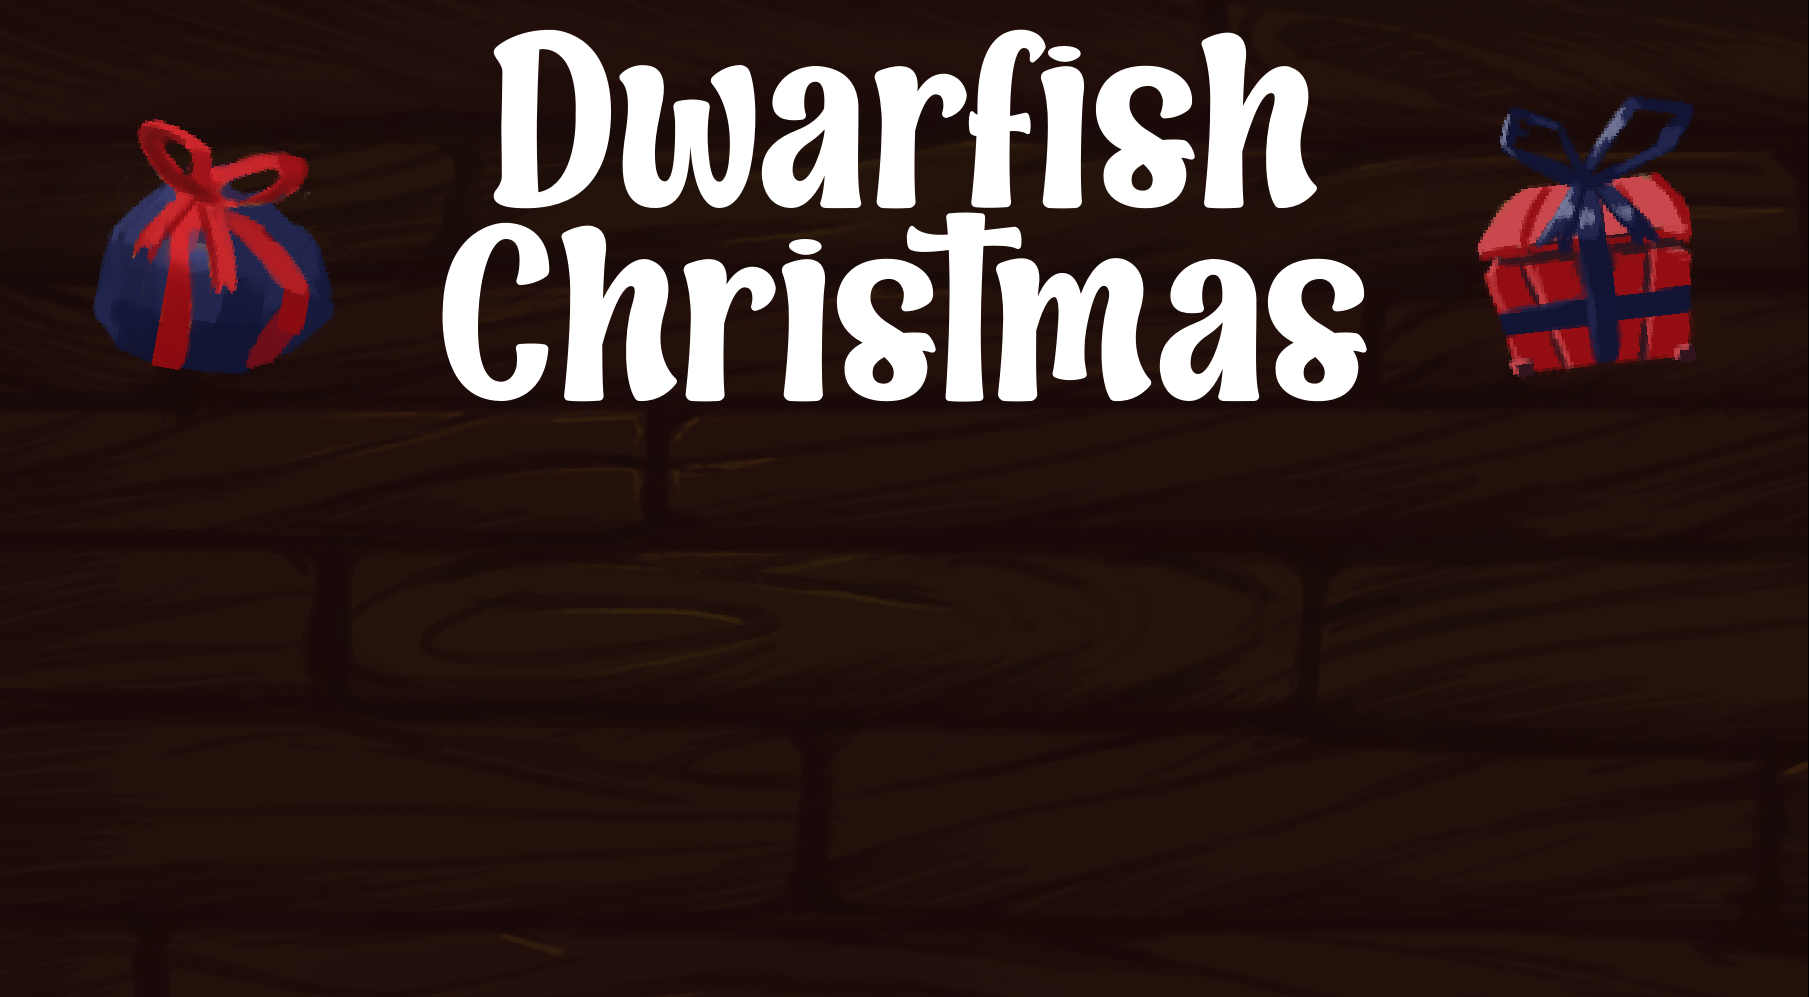 Dwarfish Christmas